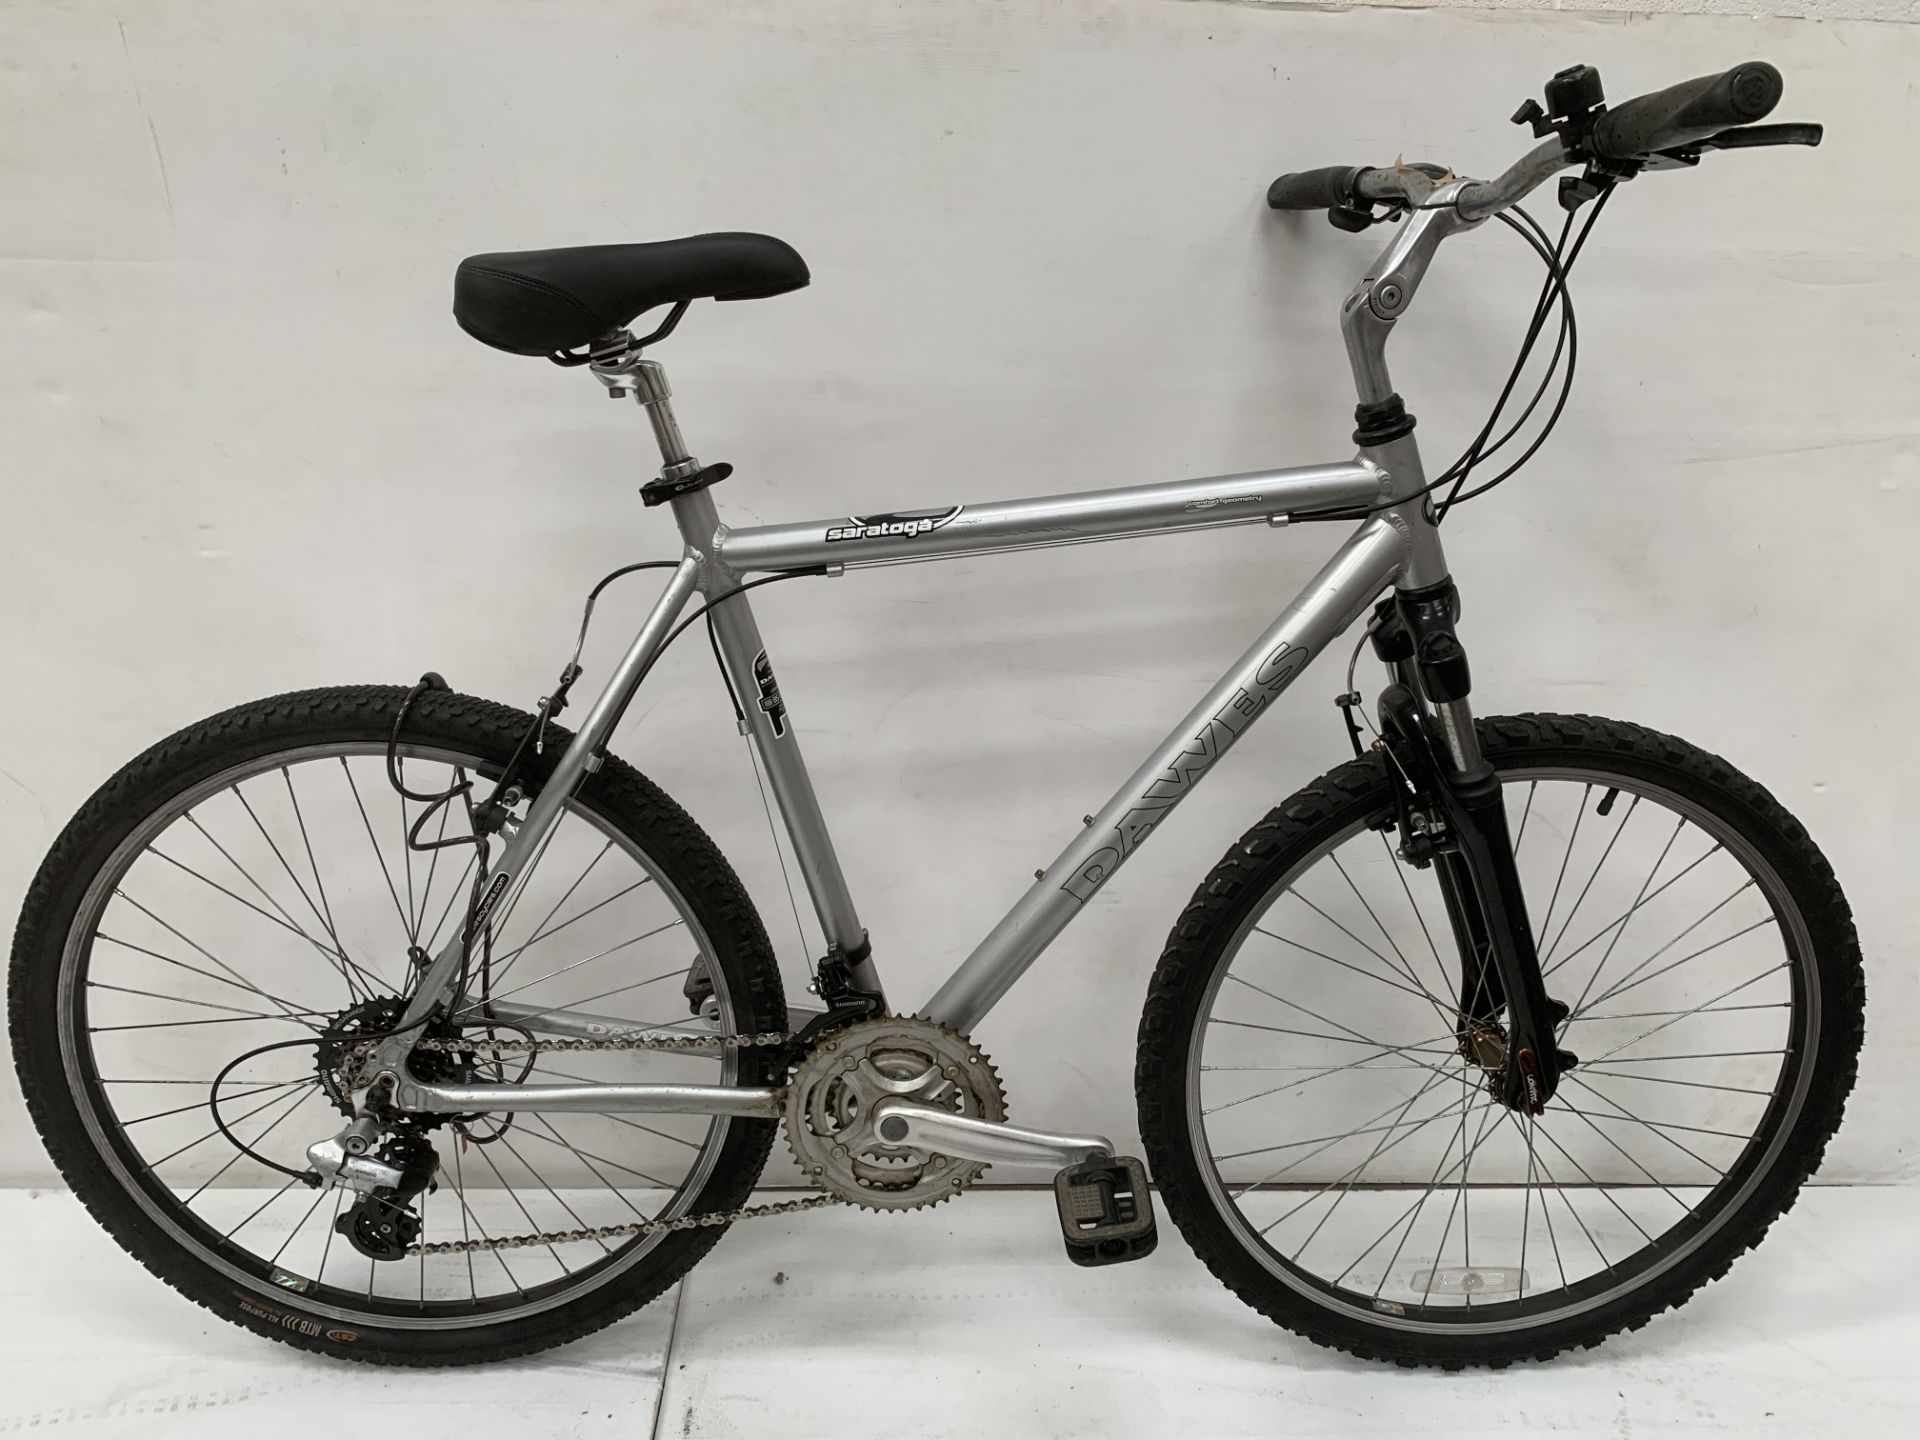 Pre-Loved Saratoga M 'Silver' Bicycle. Original RRP £250